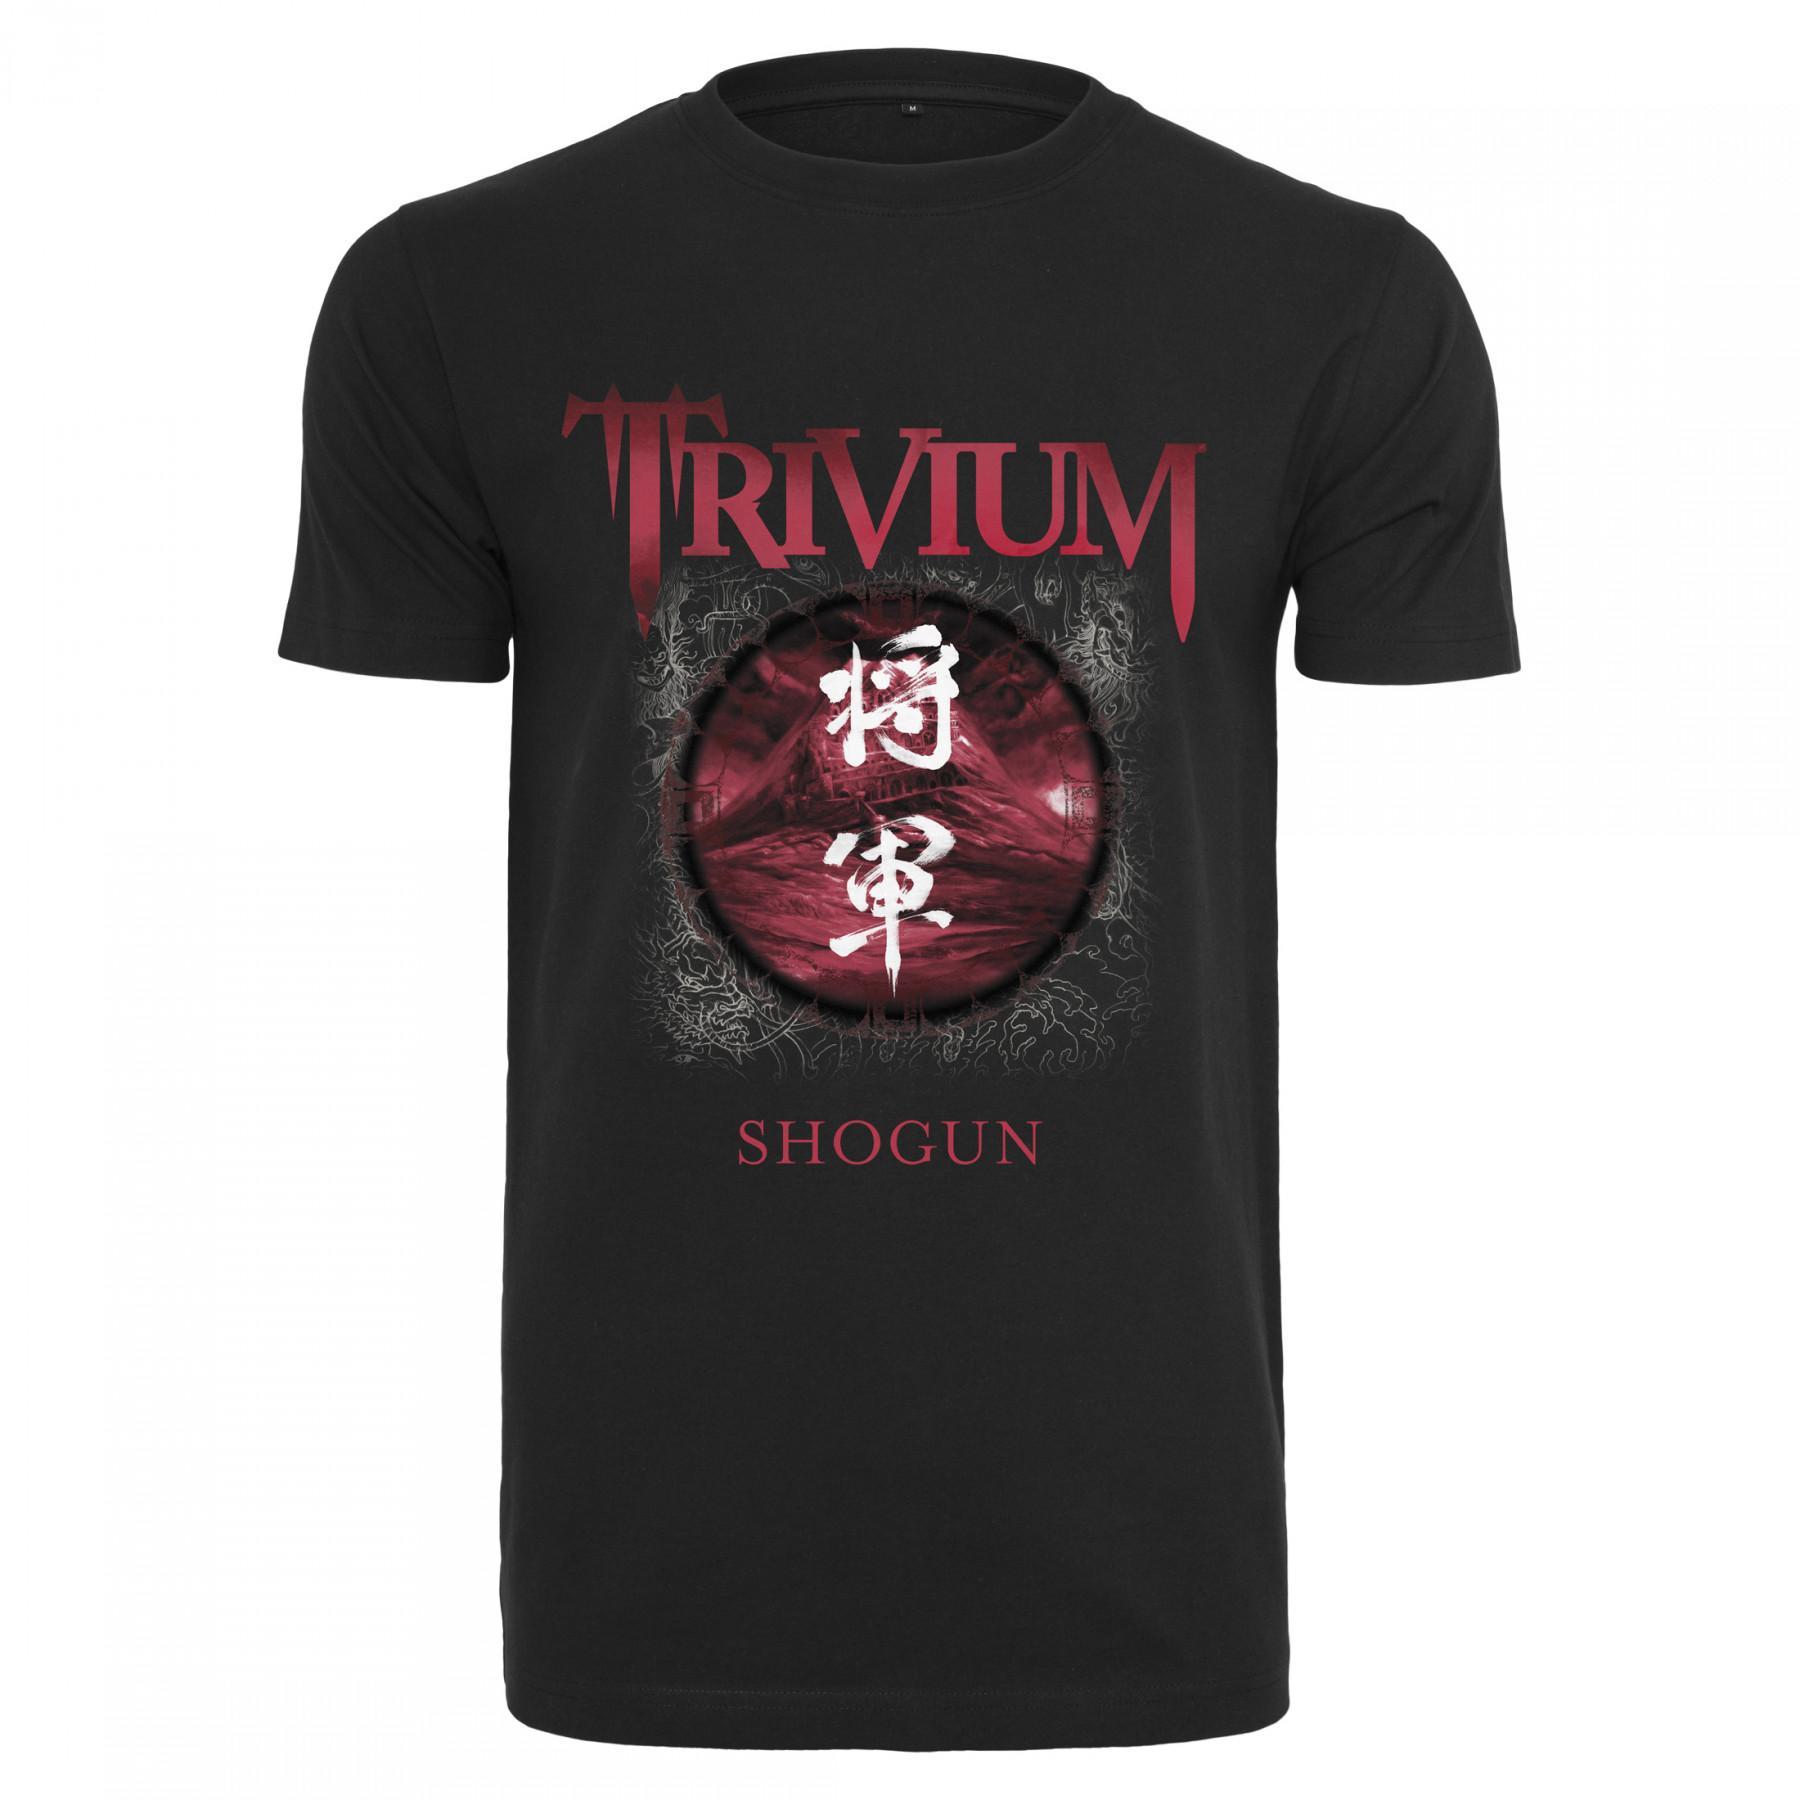 T-shirt urban classic trivium hogun